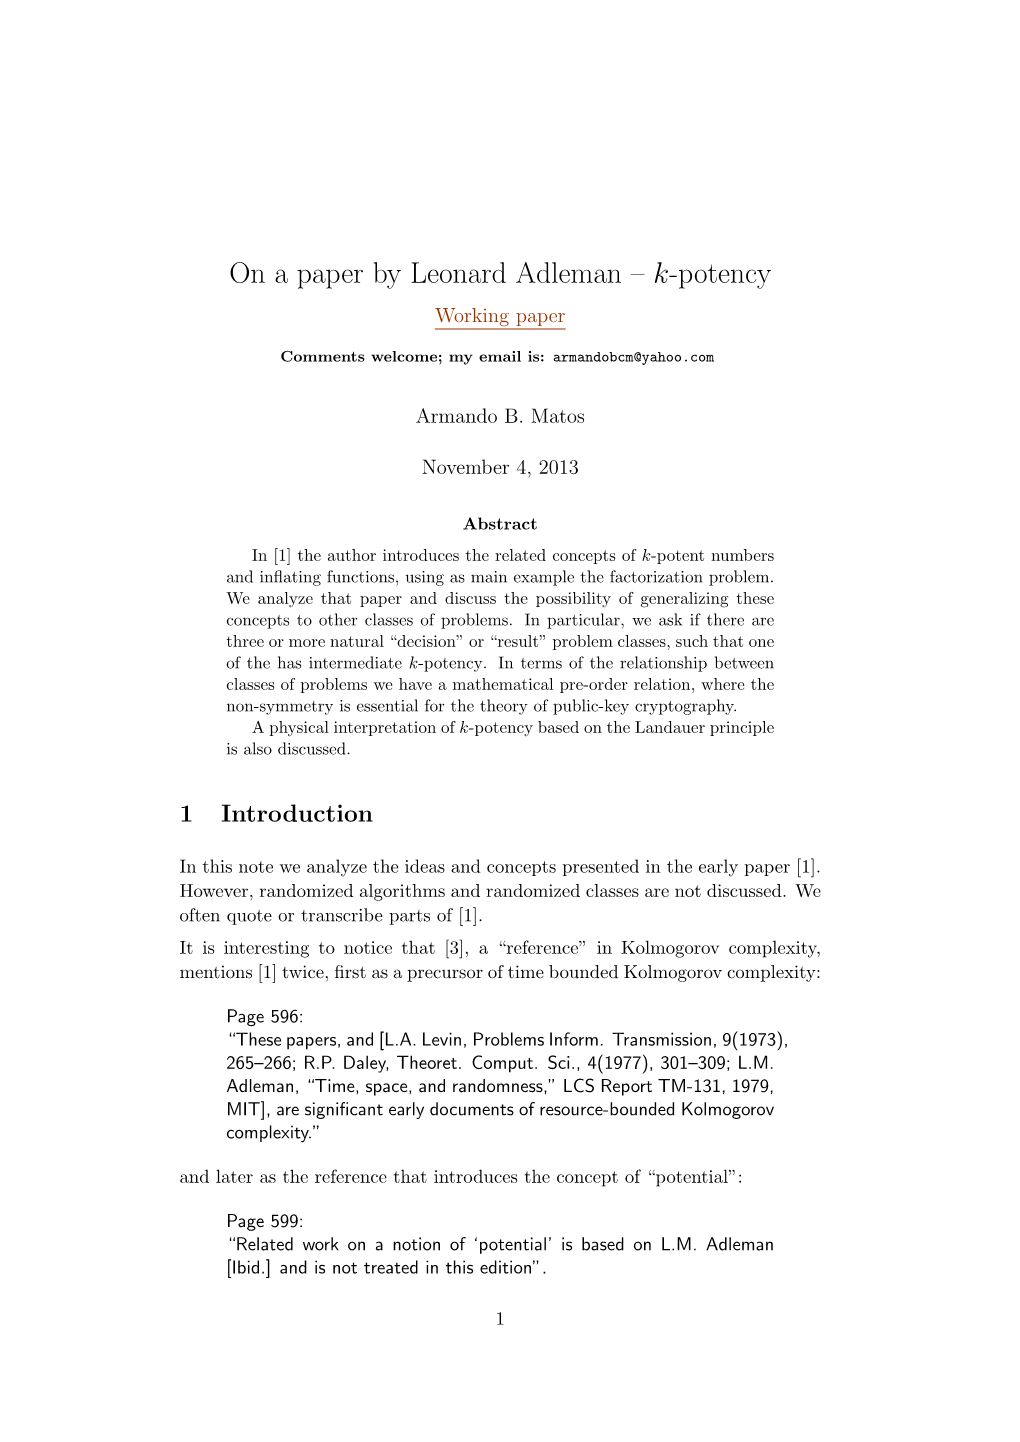 On a Paper by Leonard Adleman – K-Potency Working Paper